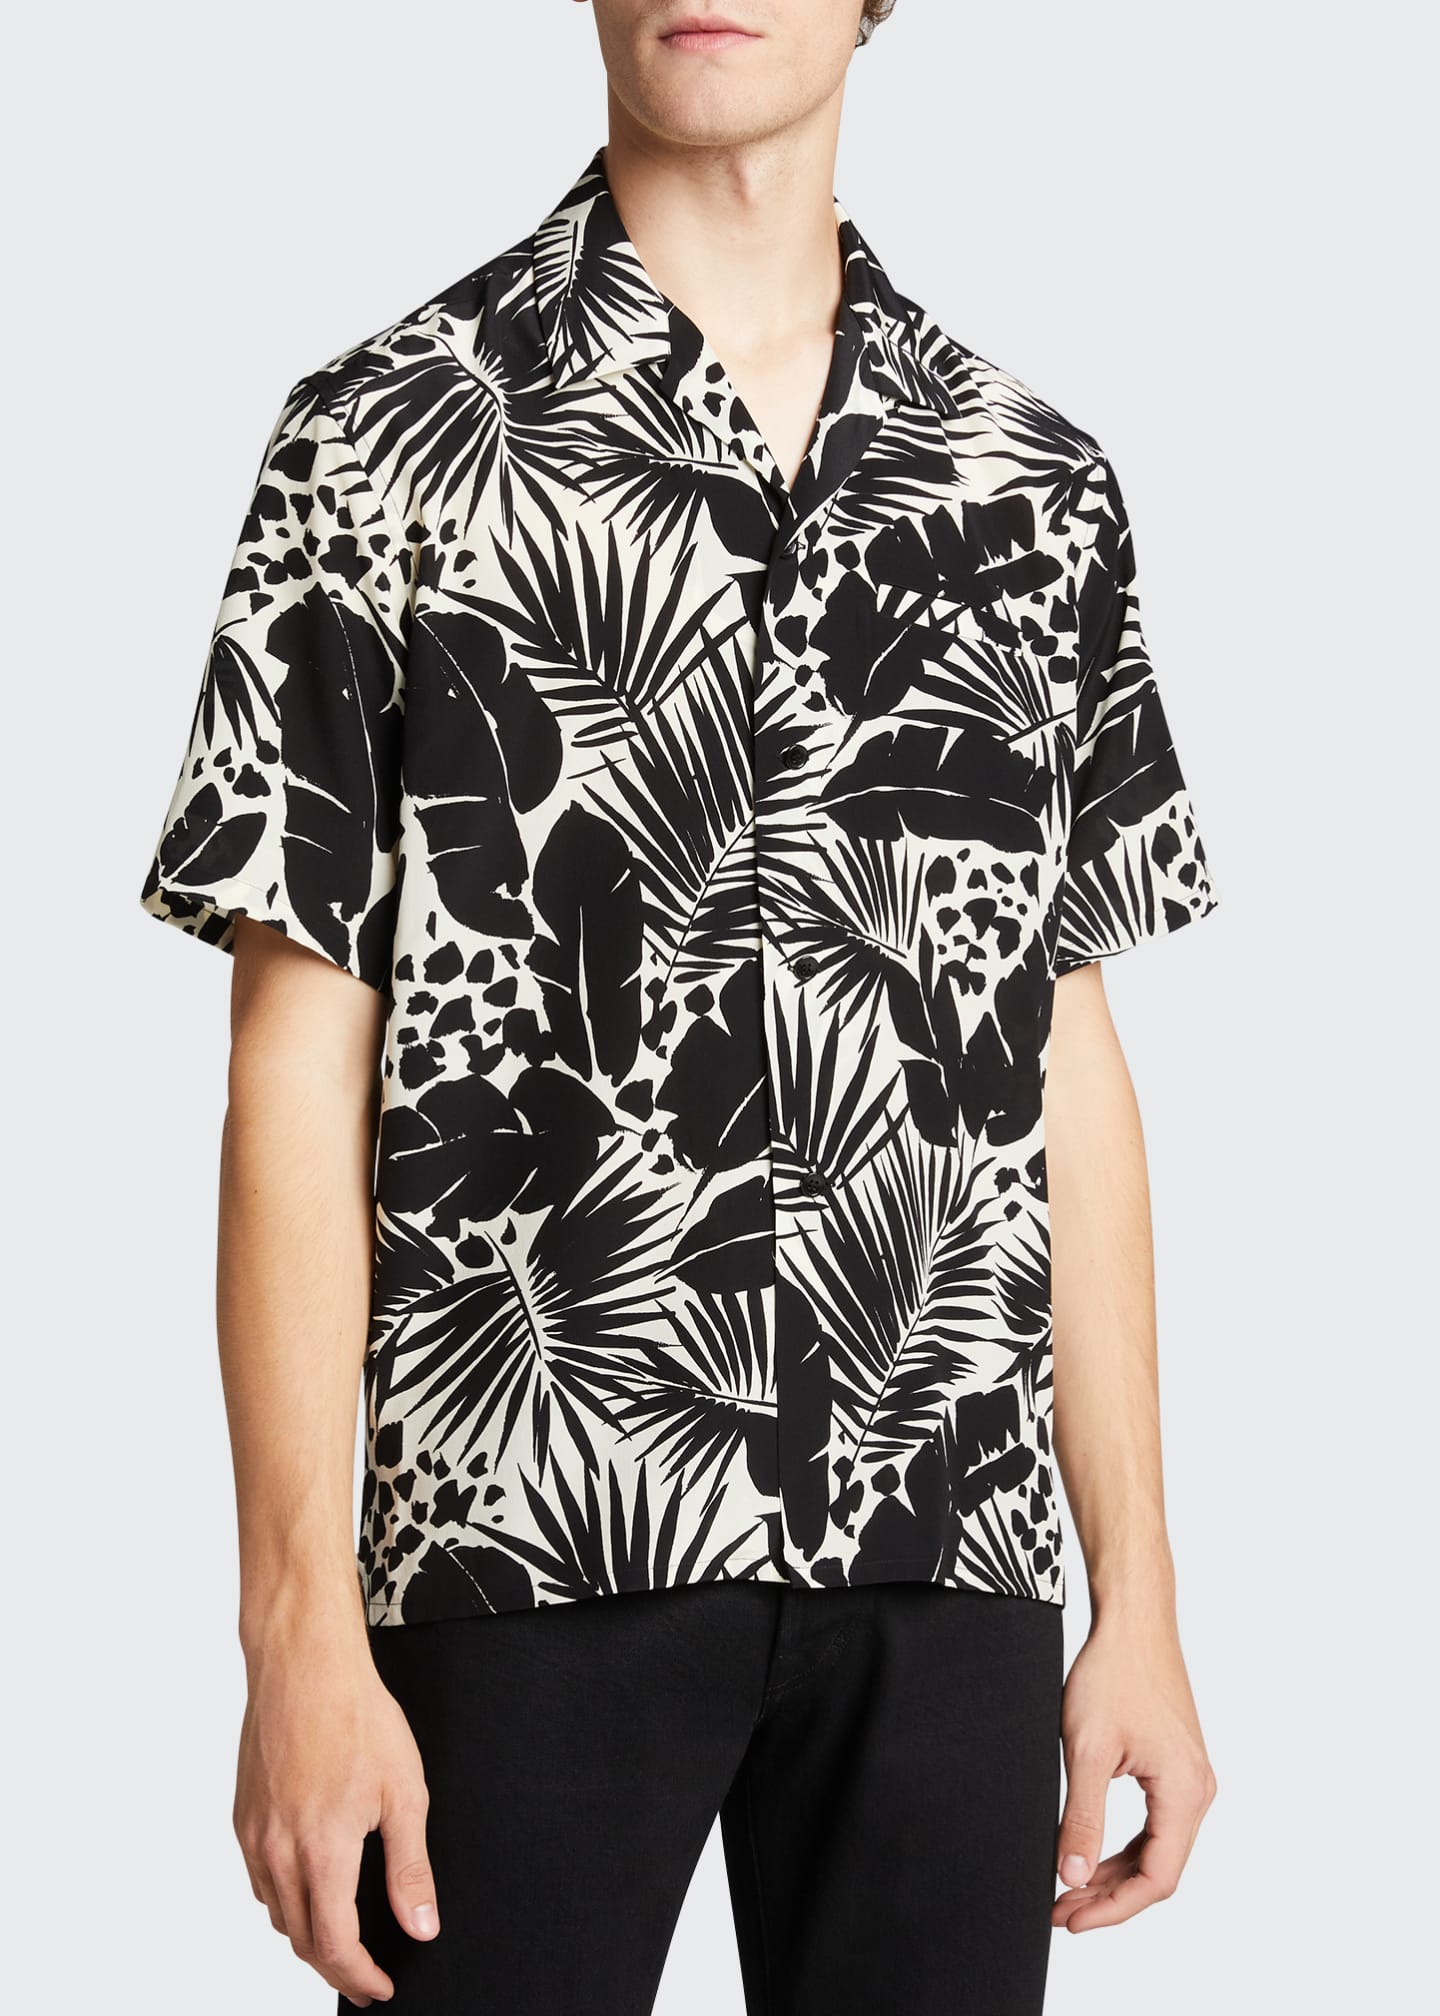 Saint Laurent Men's Silk Jungle-Print Camp Shirt - Bergdorf Goodman